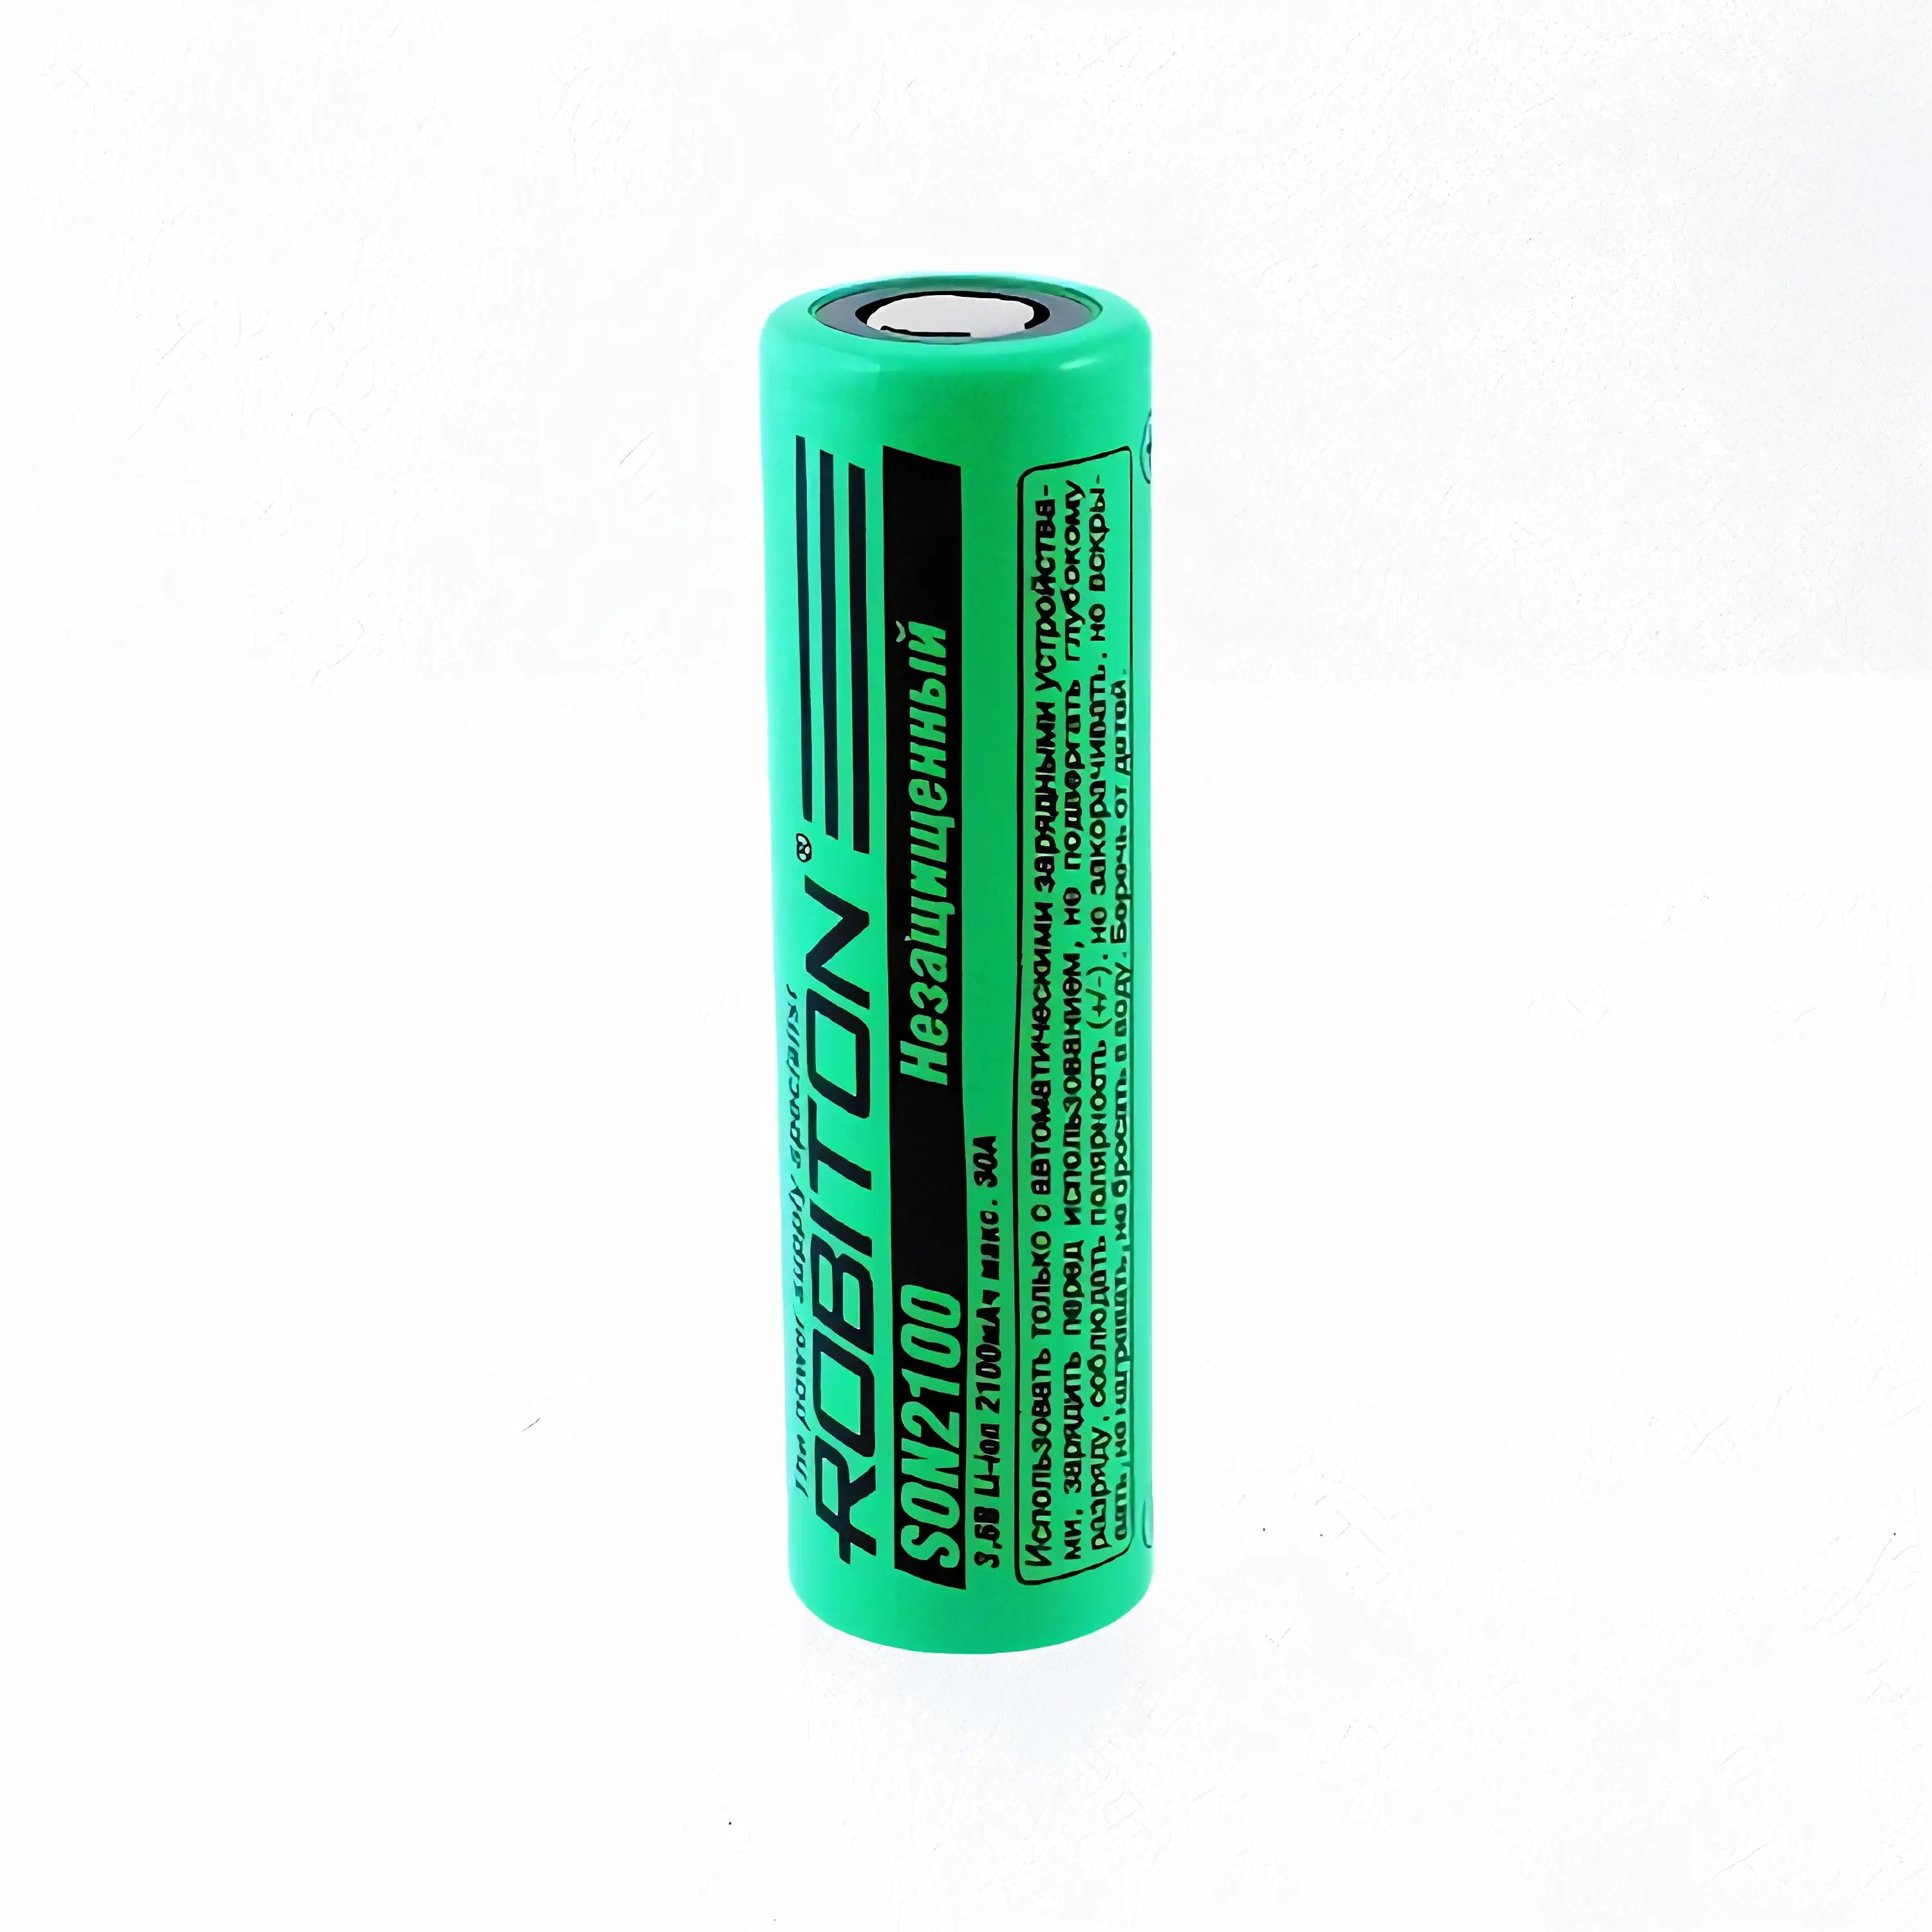 Batería de litio robiton 18650 Lison, alta corriente, sin protección, a granel 0